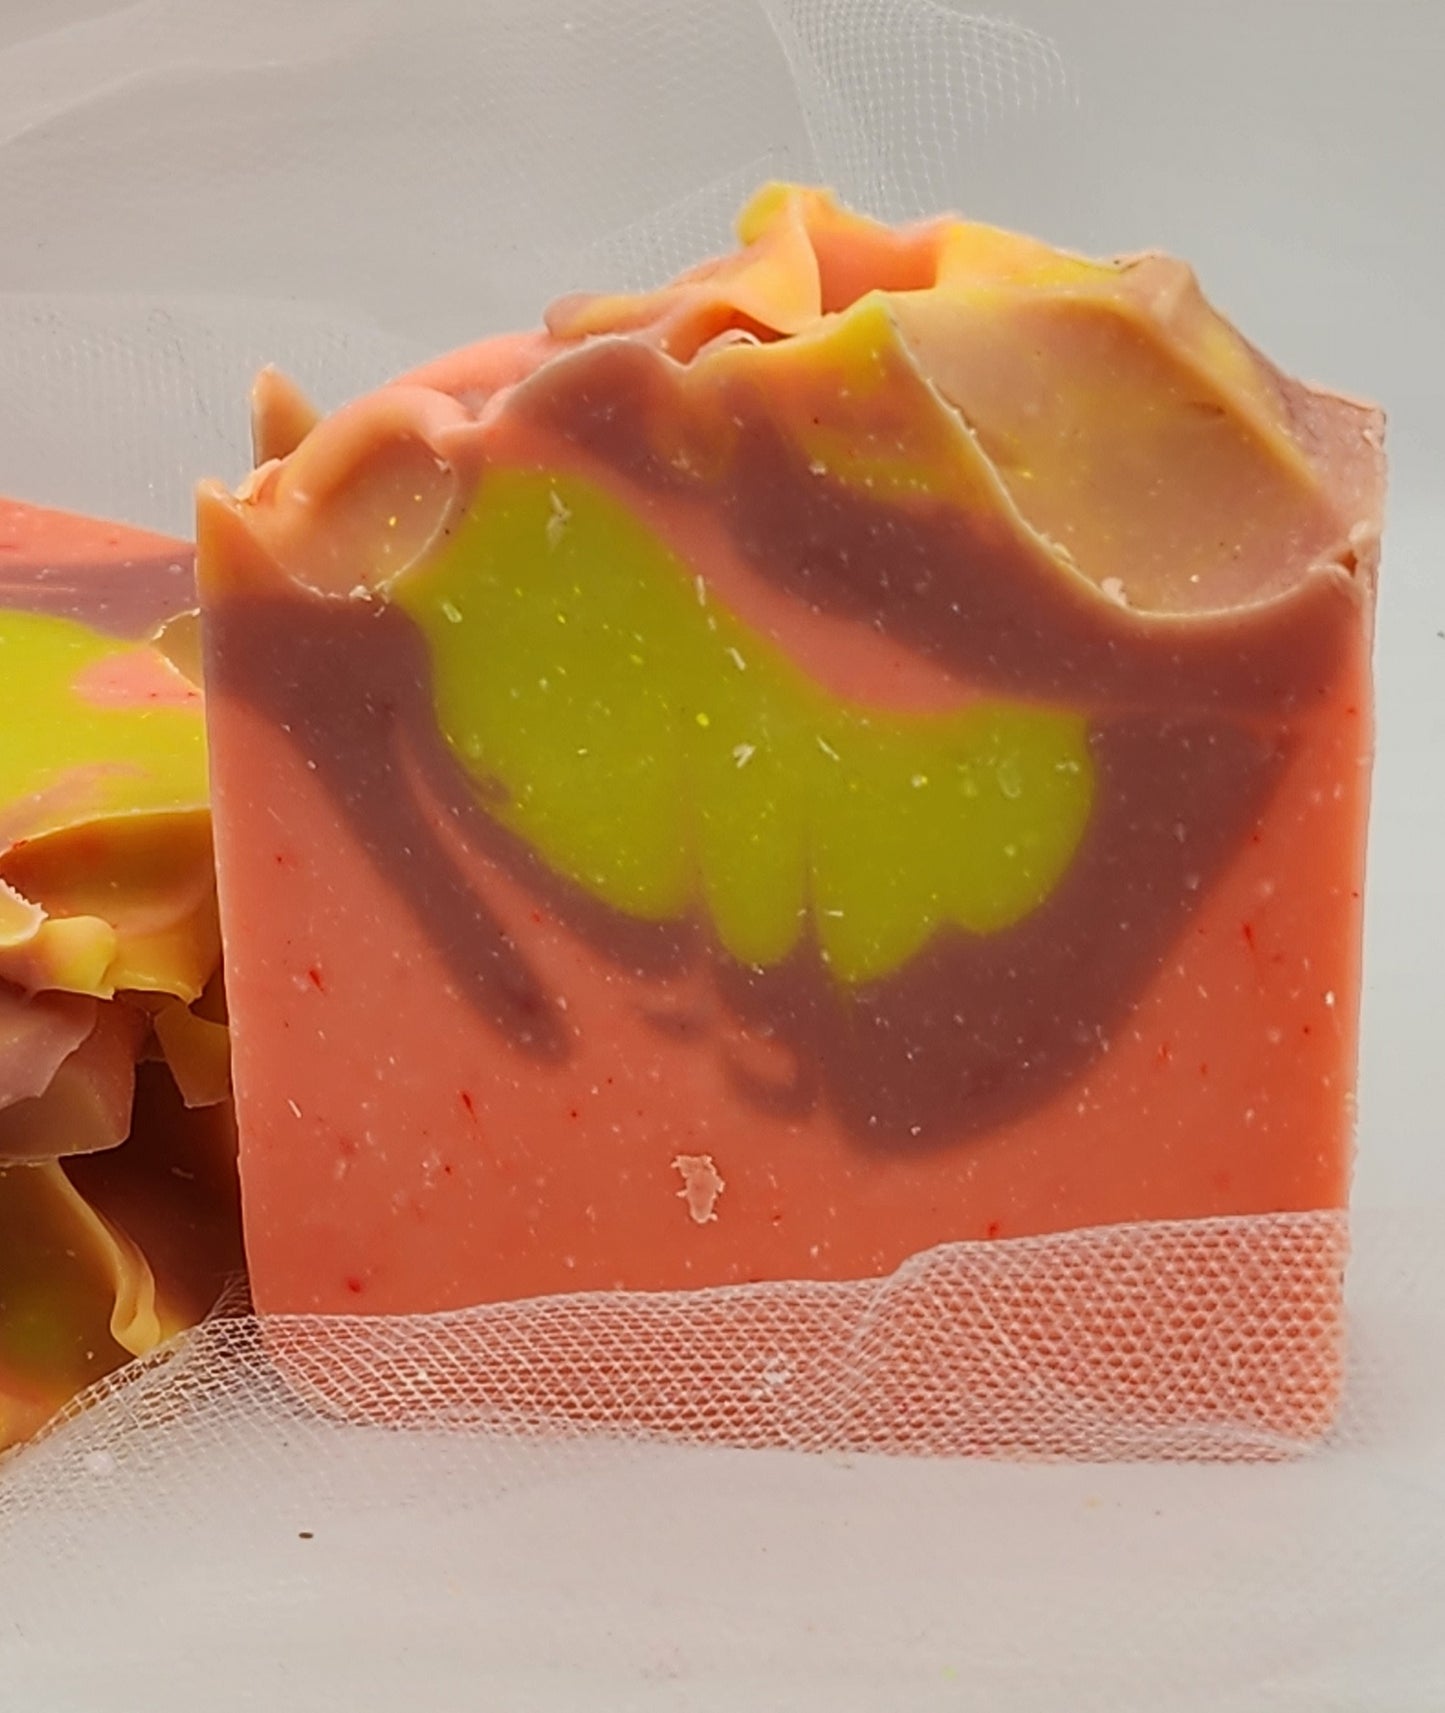 FIRECRACKER / Women's Bar Soap / Gift Soap / Gift Idea / Handmade Soap / Cold Process Soap